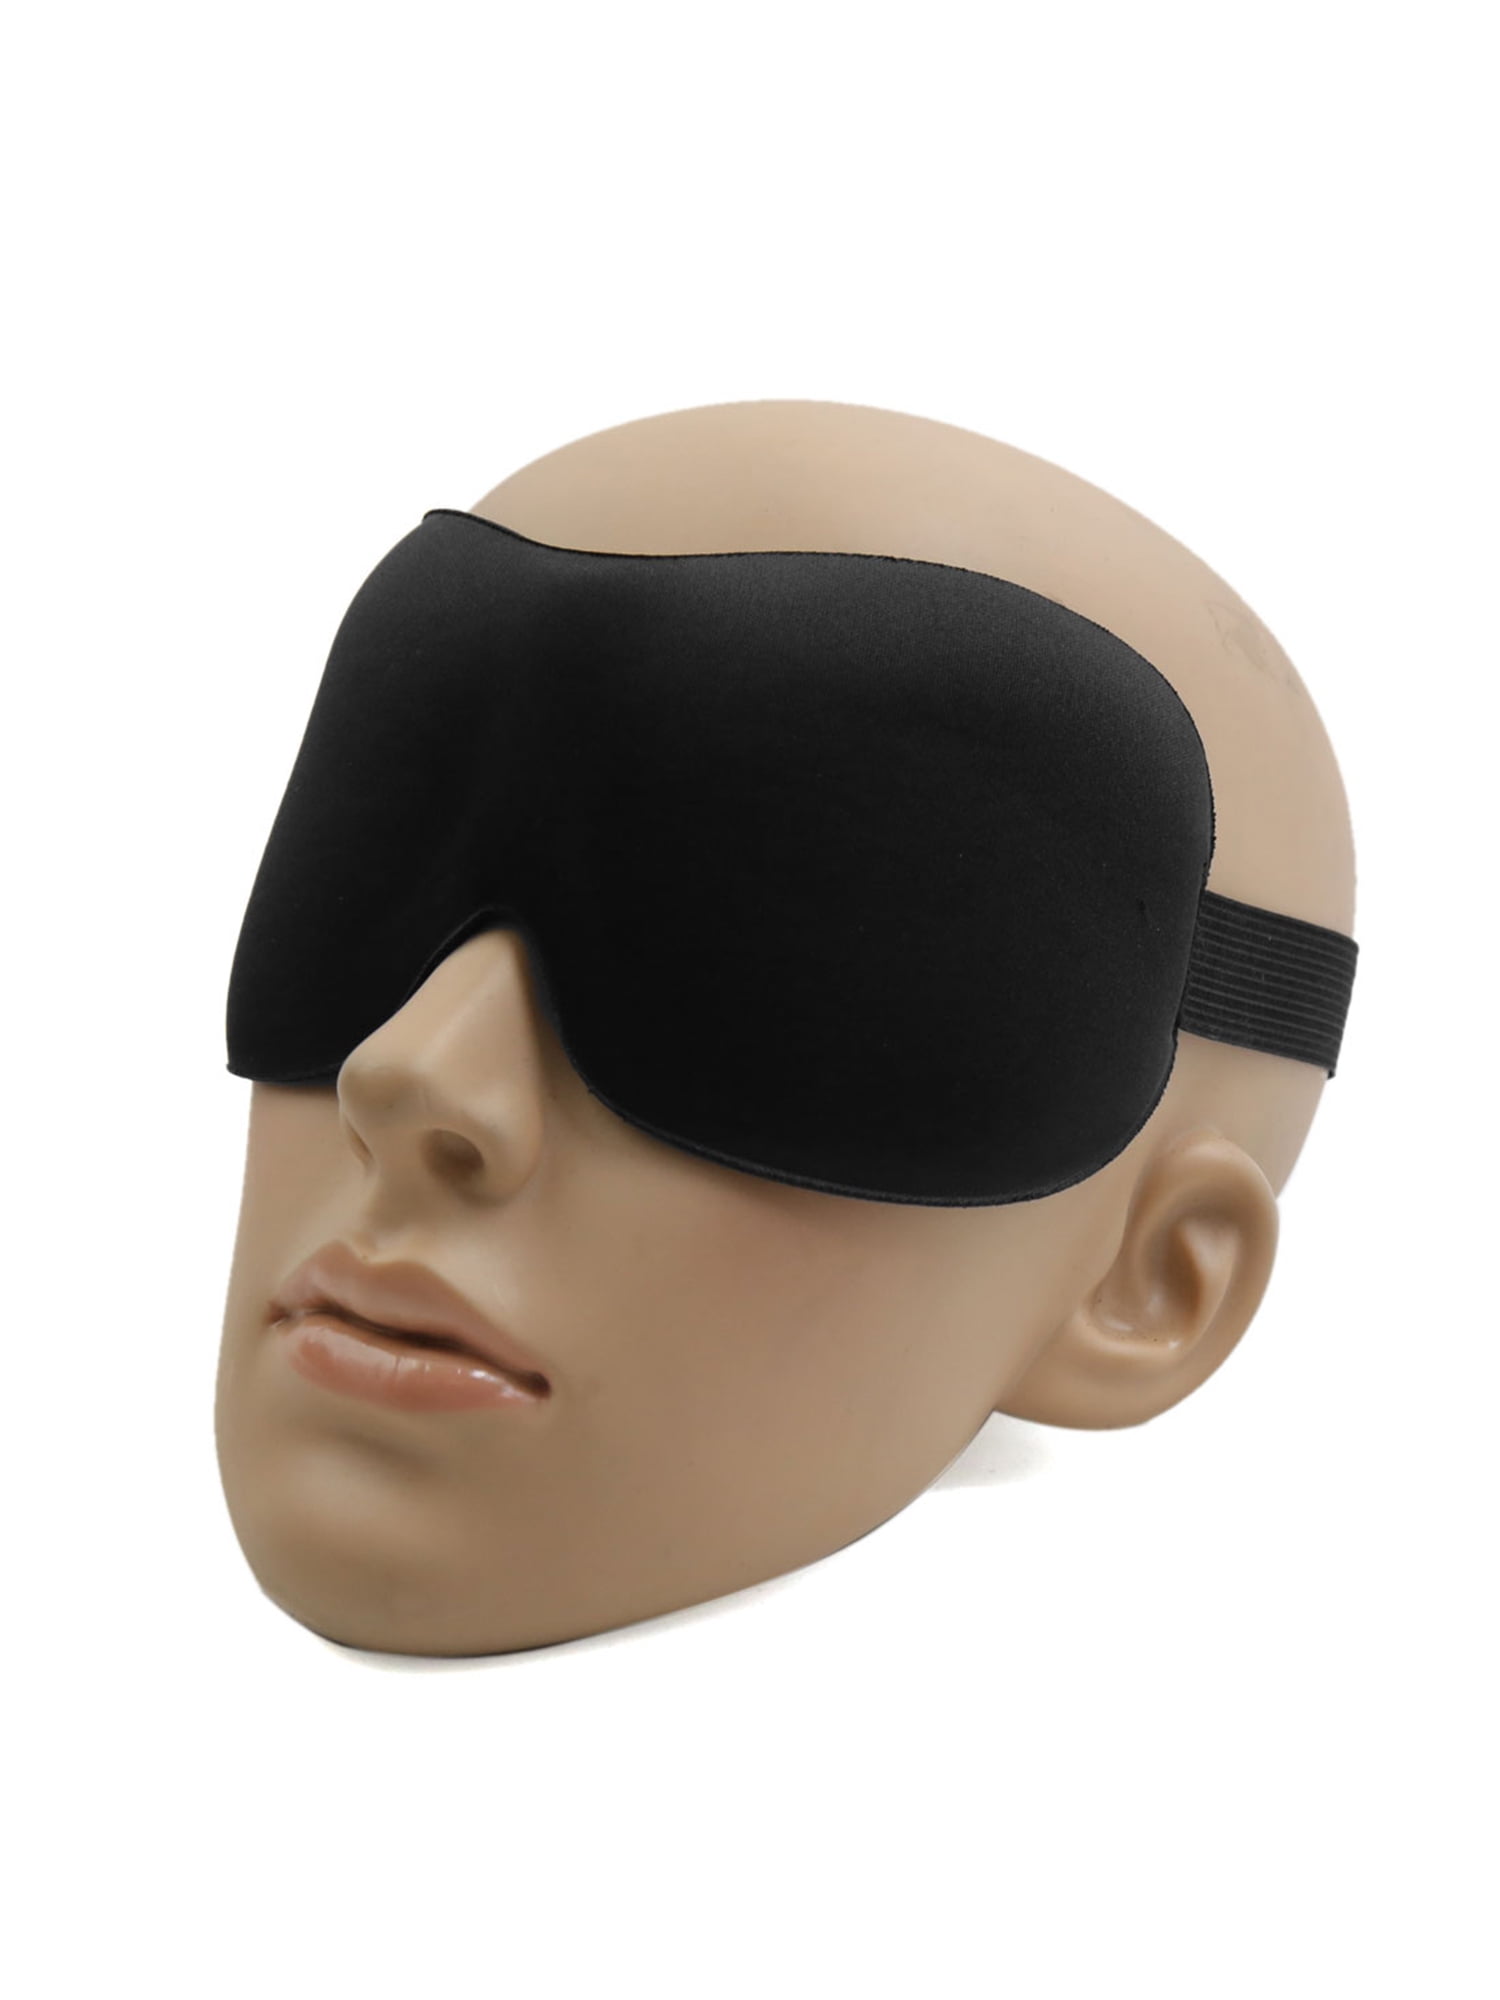 3D Eye Mask Night Relax Rest Sleep Soft Padded Shade Cover Sleeping Blindfold 